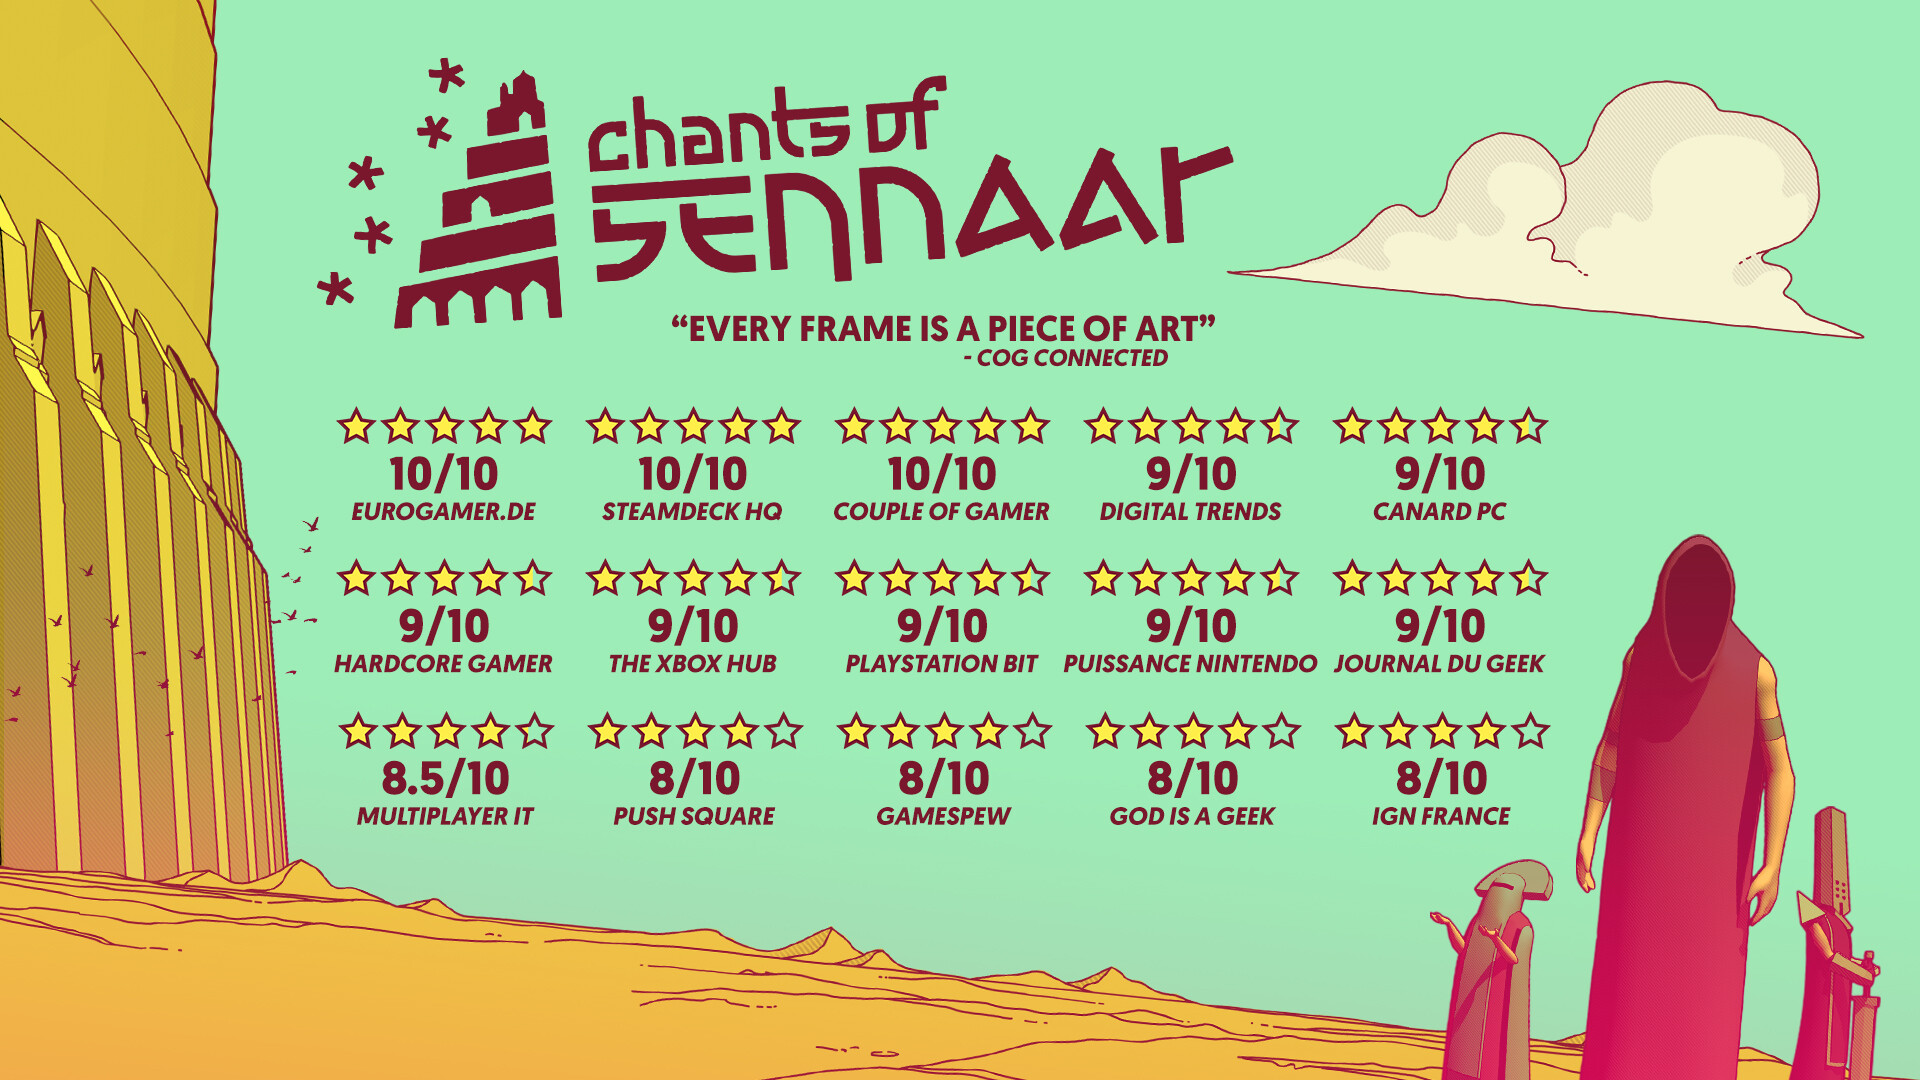 Find the best laptops for Chants of Sennaar